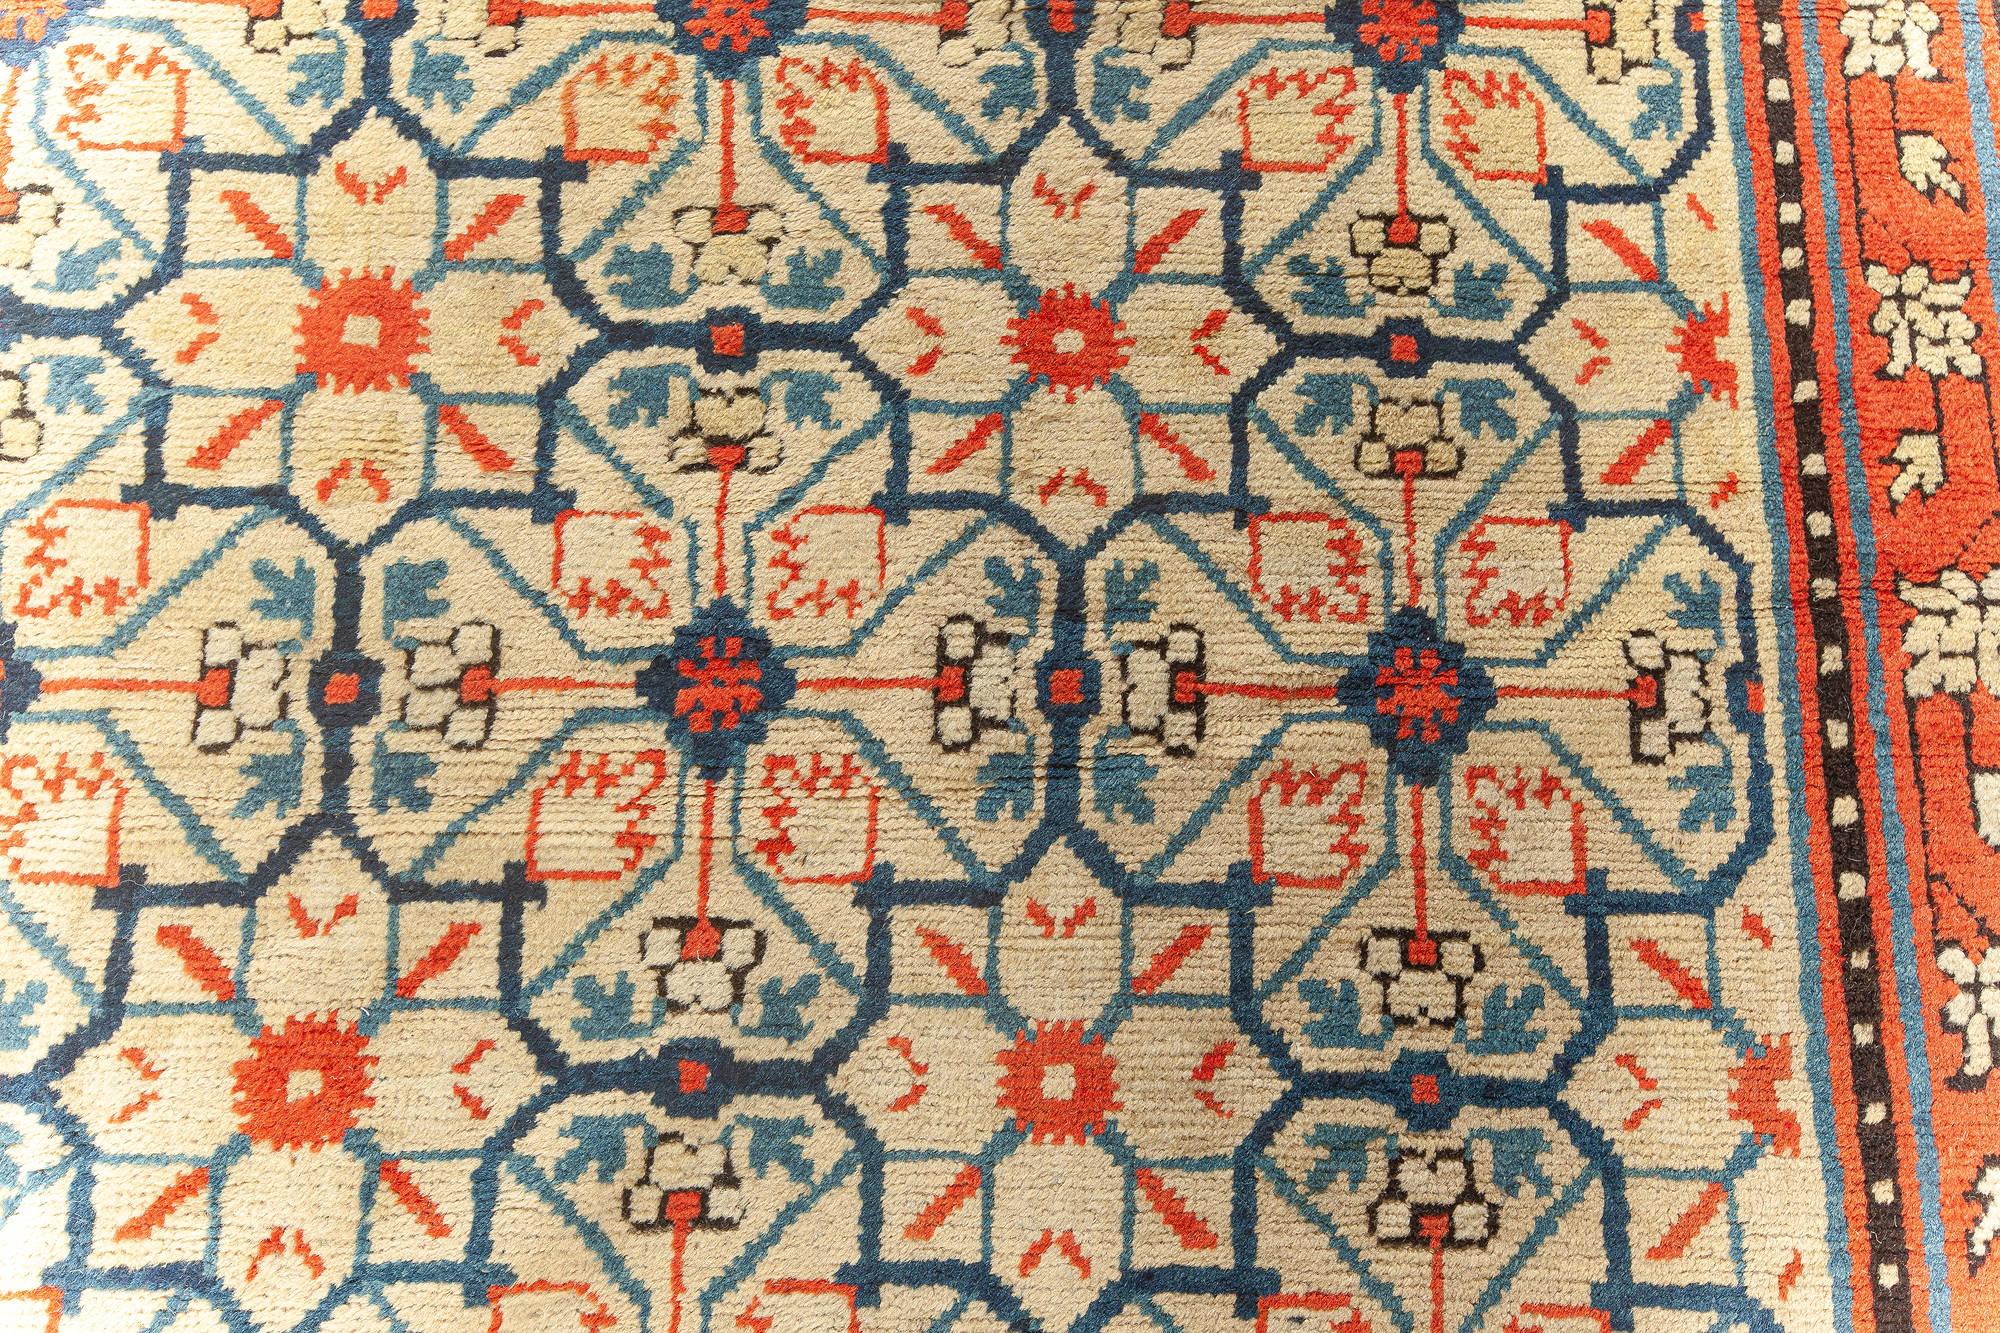 Early 20th century Samarkand 'Khotan' handmade rug.
Size: 8'9